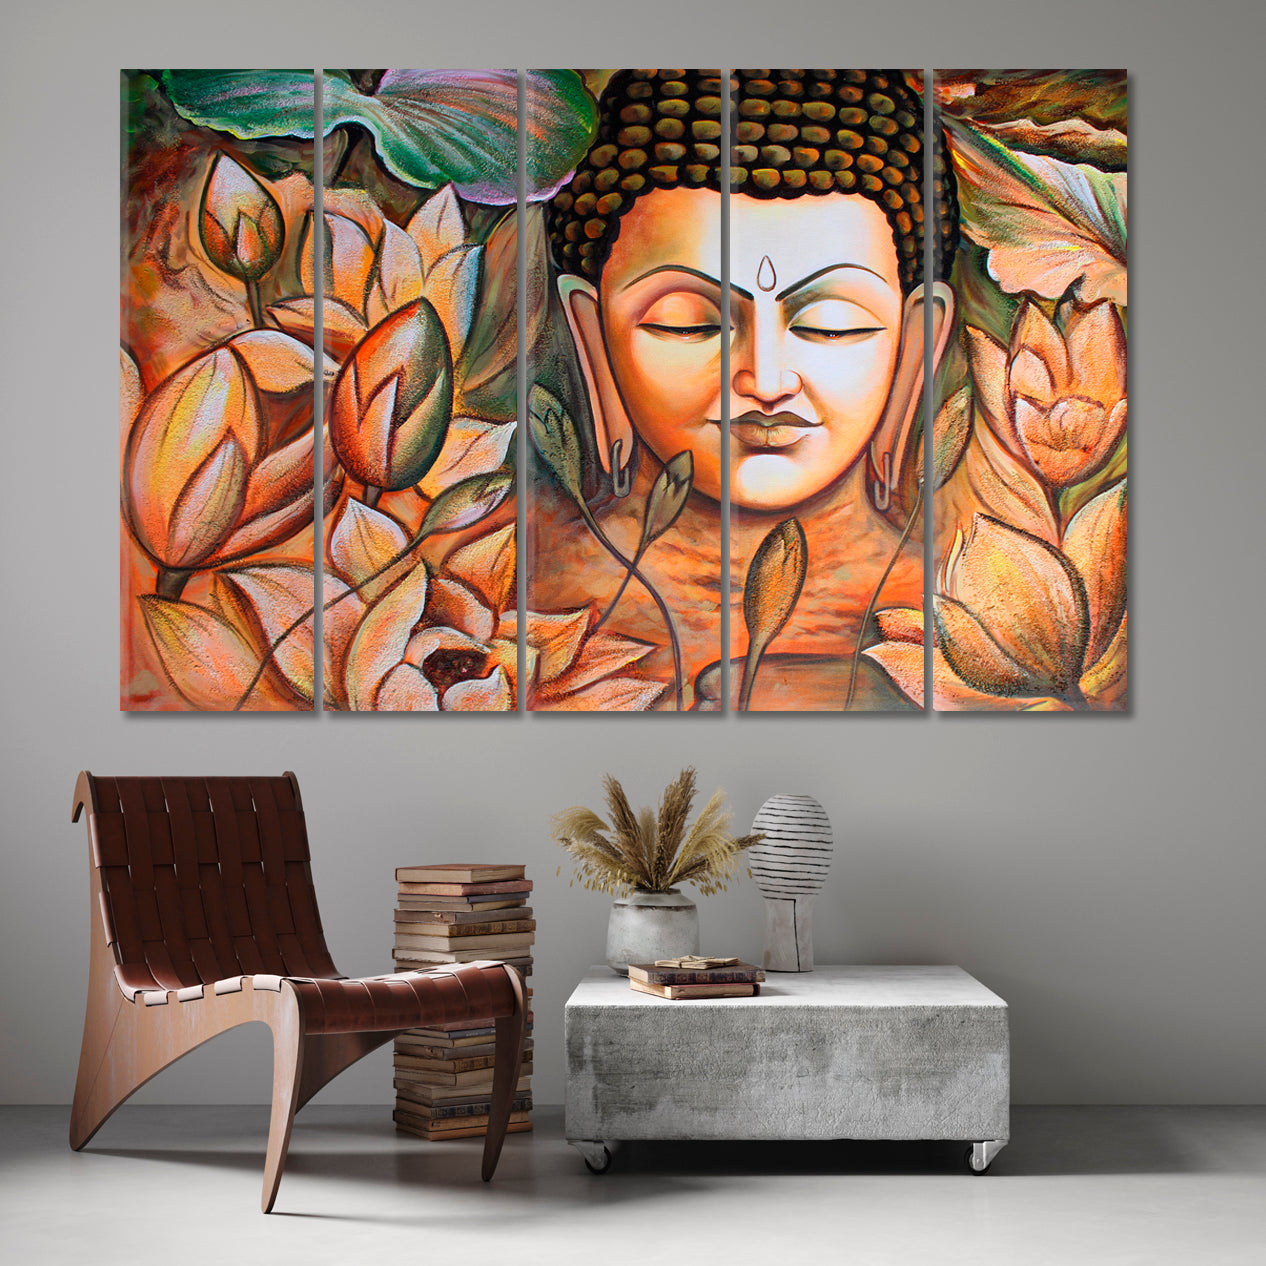 Lord Buddha Spiritual Poster Religious Modern Art Artesty 5 panels 36" x 24" 